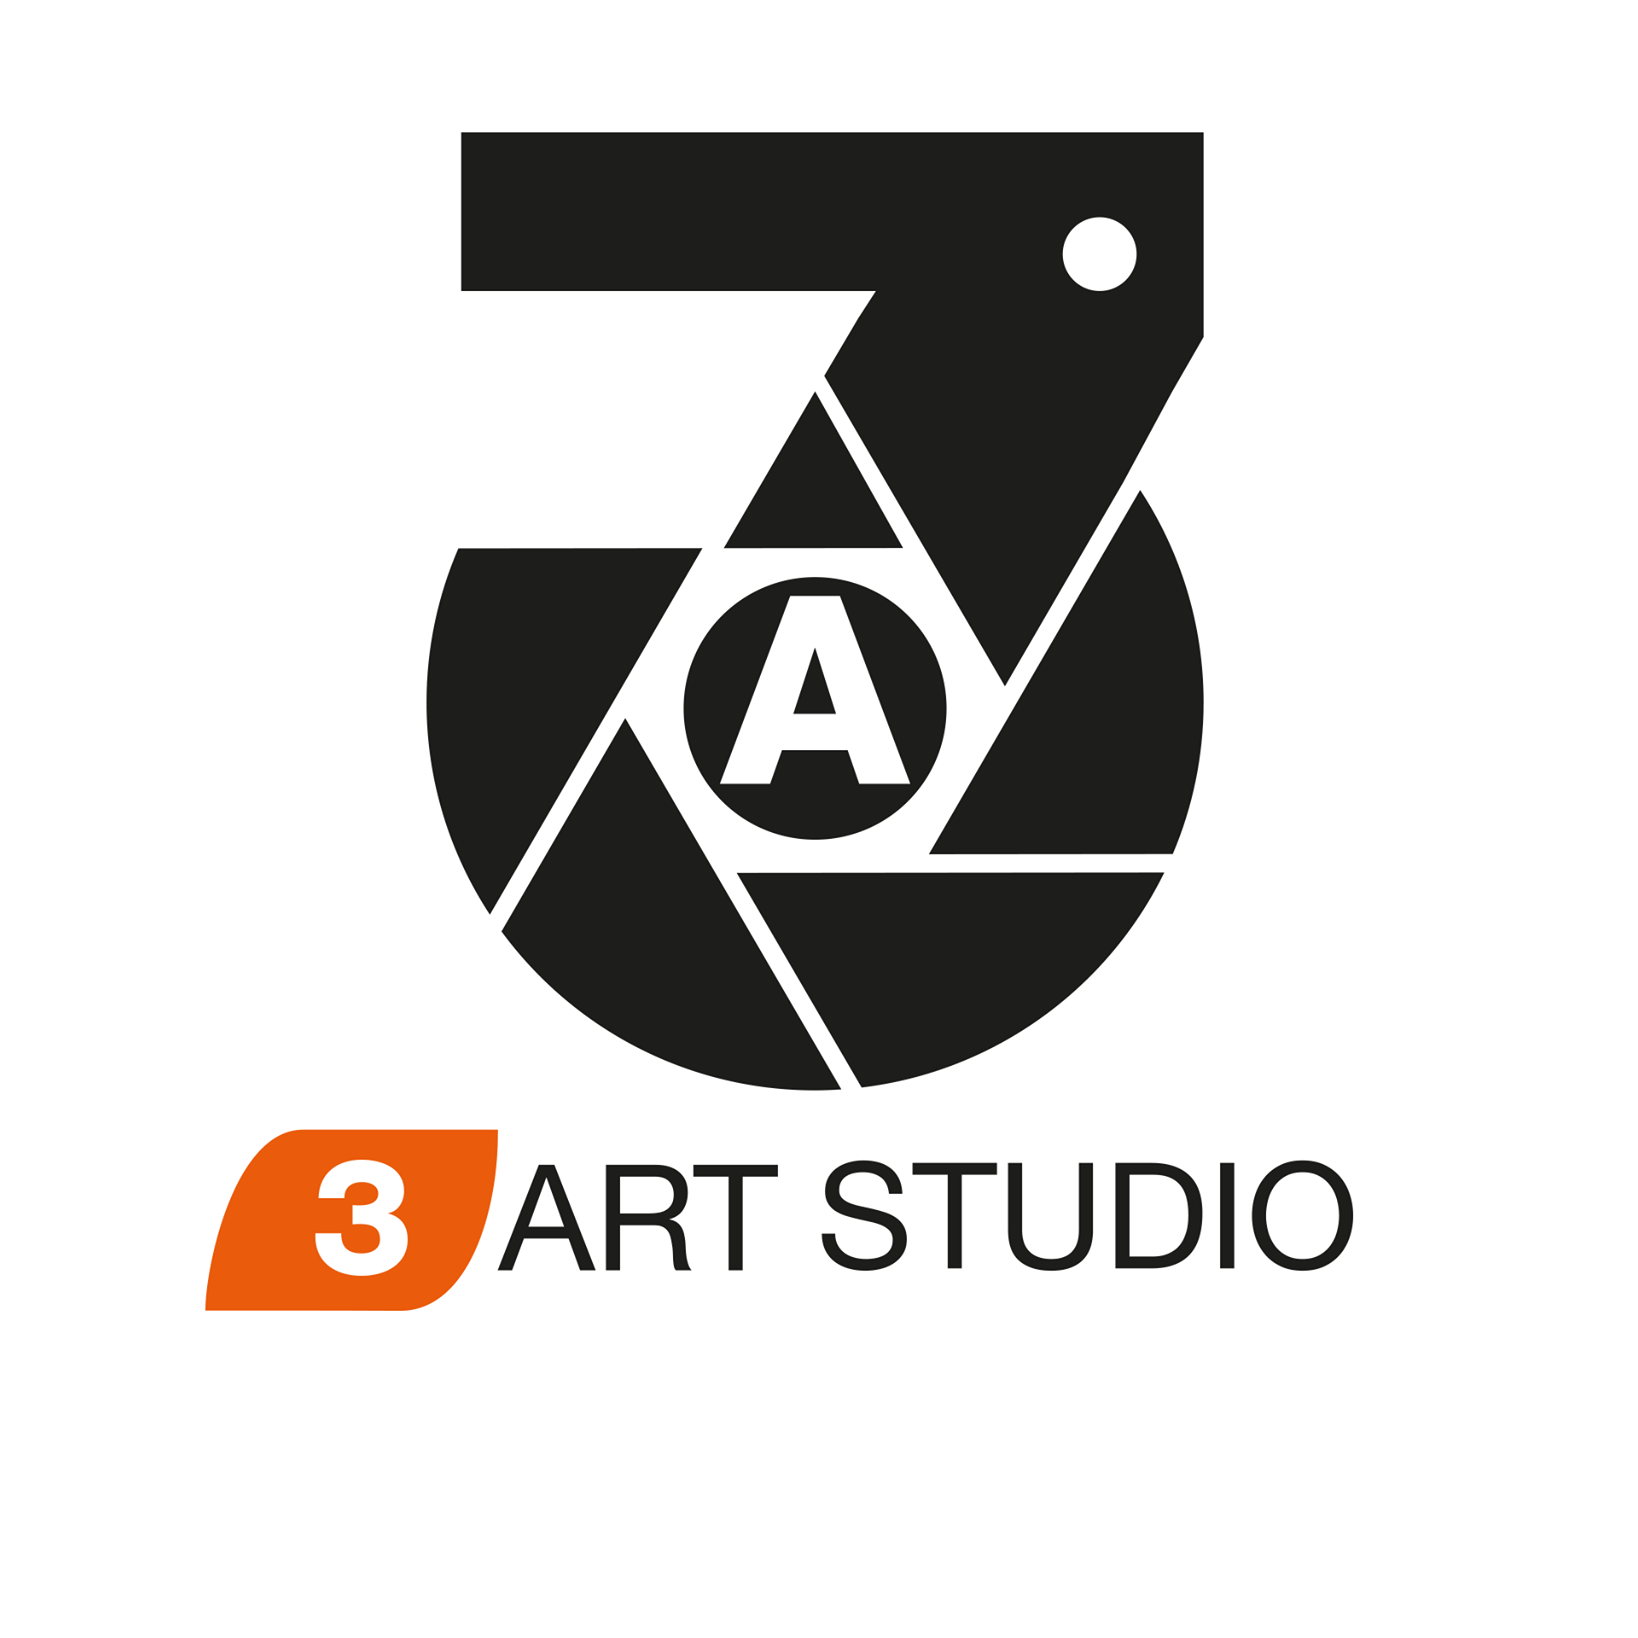 3 ART STUDIO|Photographer|Event Services